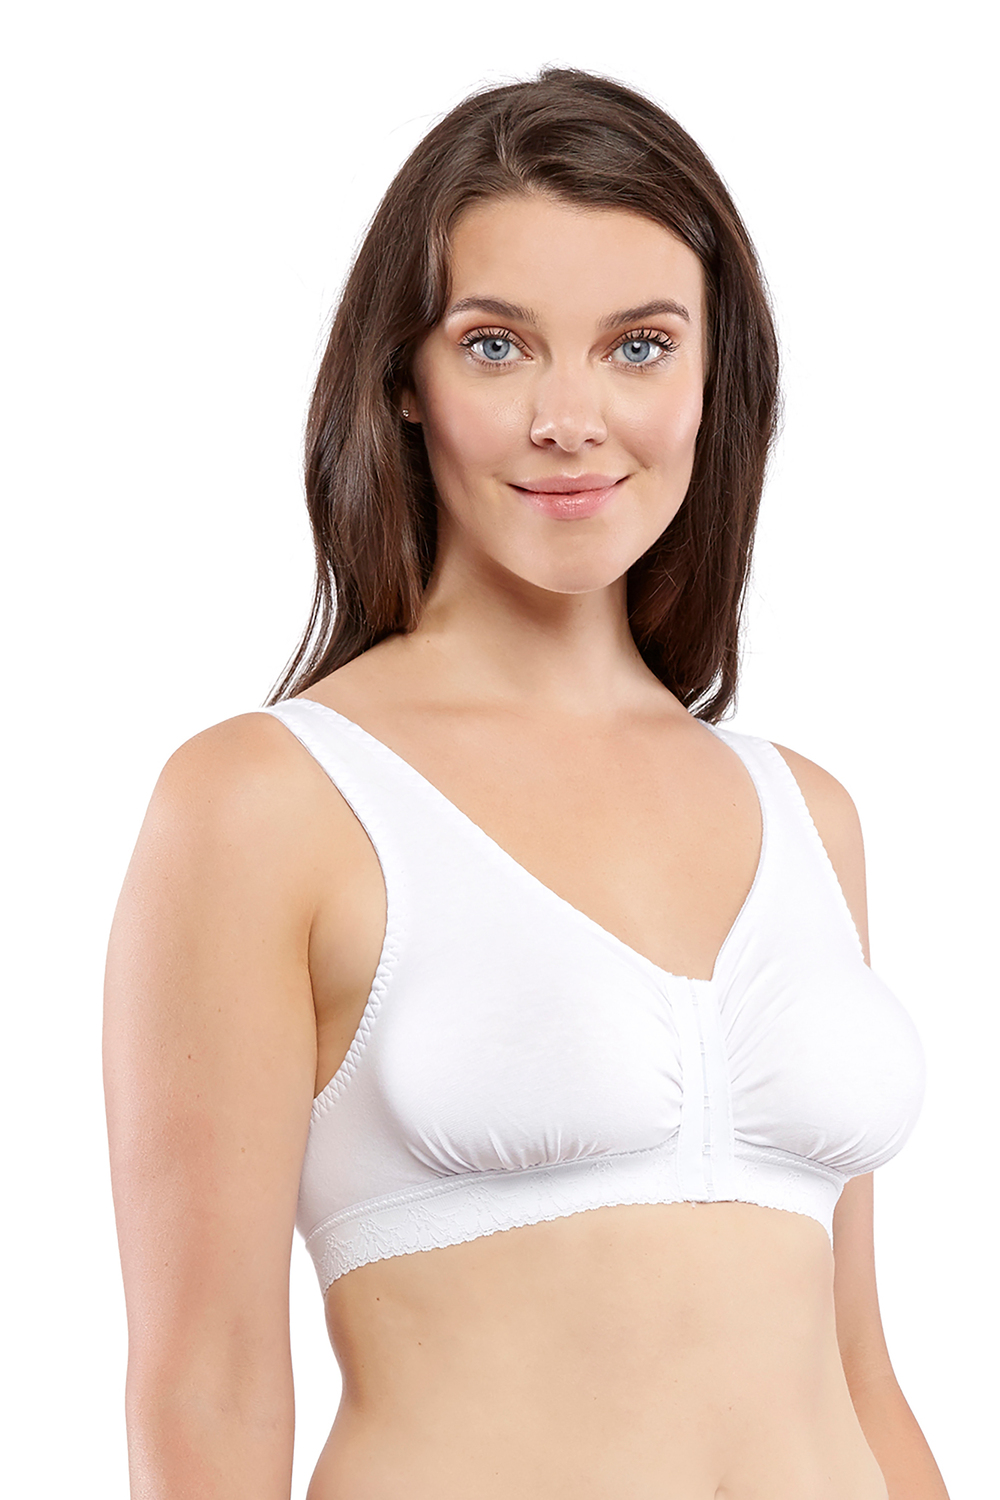 Carole Martin - Cotton Comfort bra, white, 36. Colour: white. Size: 36  b/c/d/dd